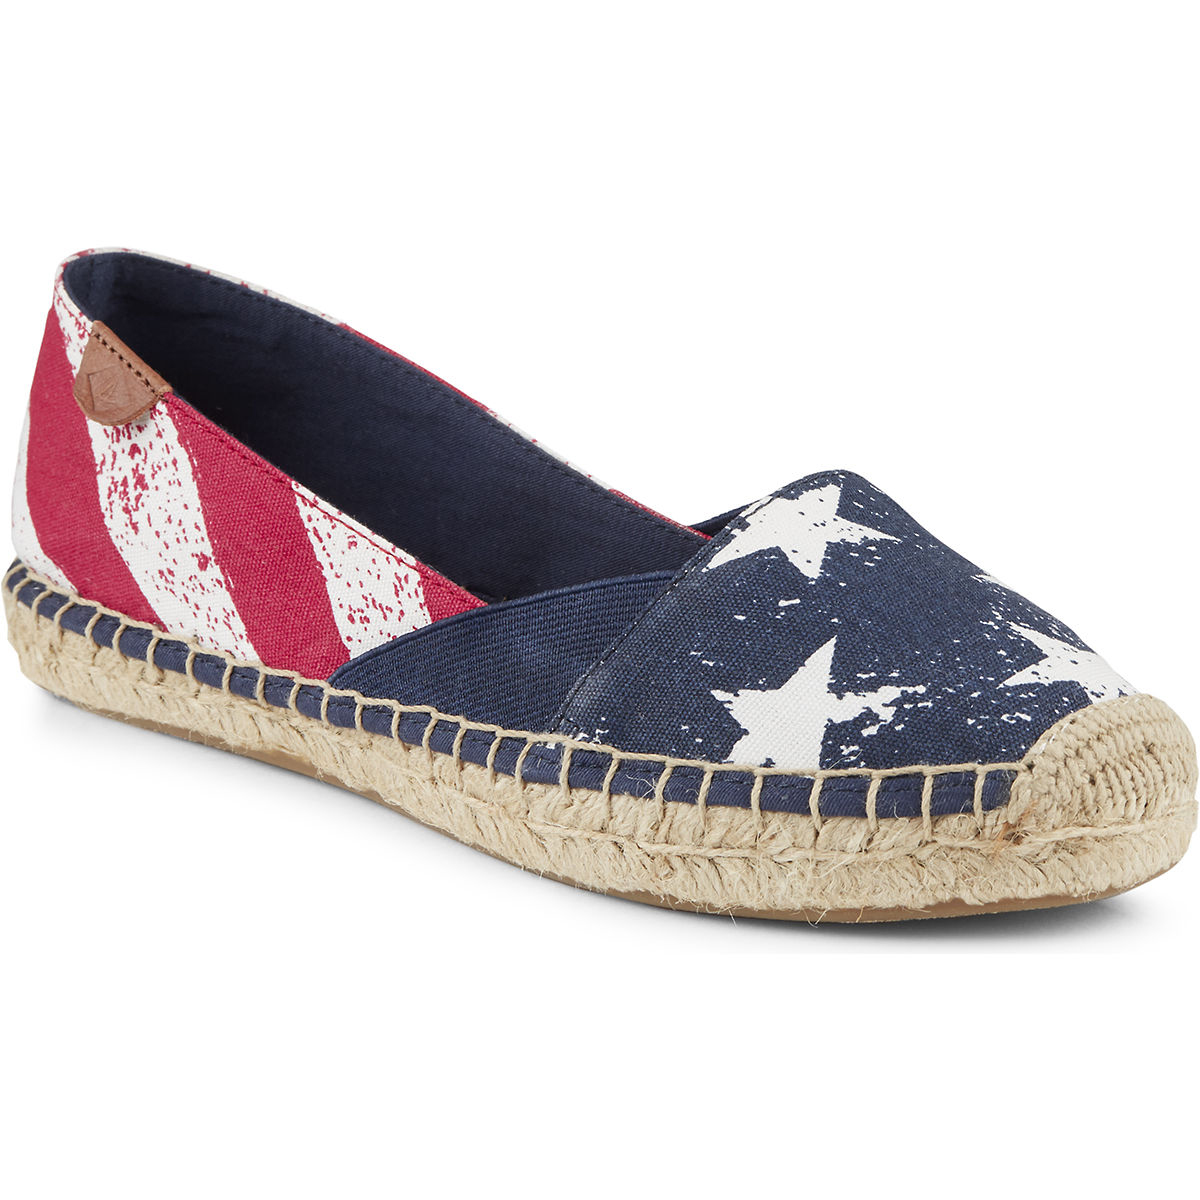 Sperry Cape Stars and Stripes女士渔夫鞋  特价仅售$29.99